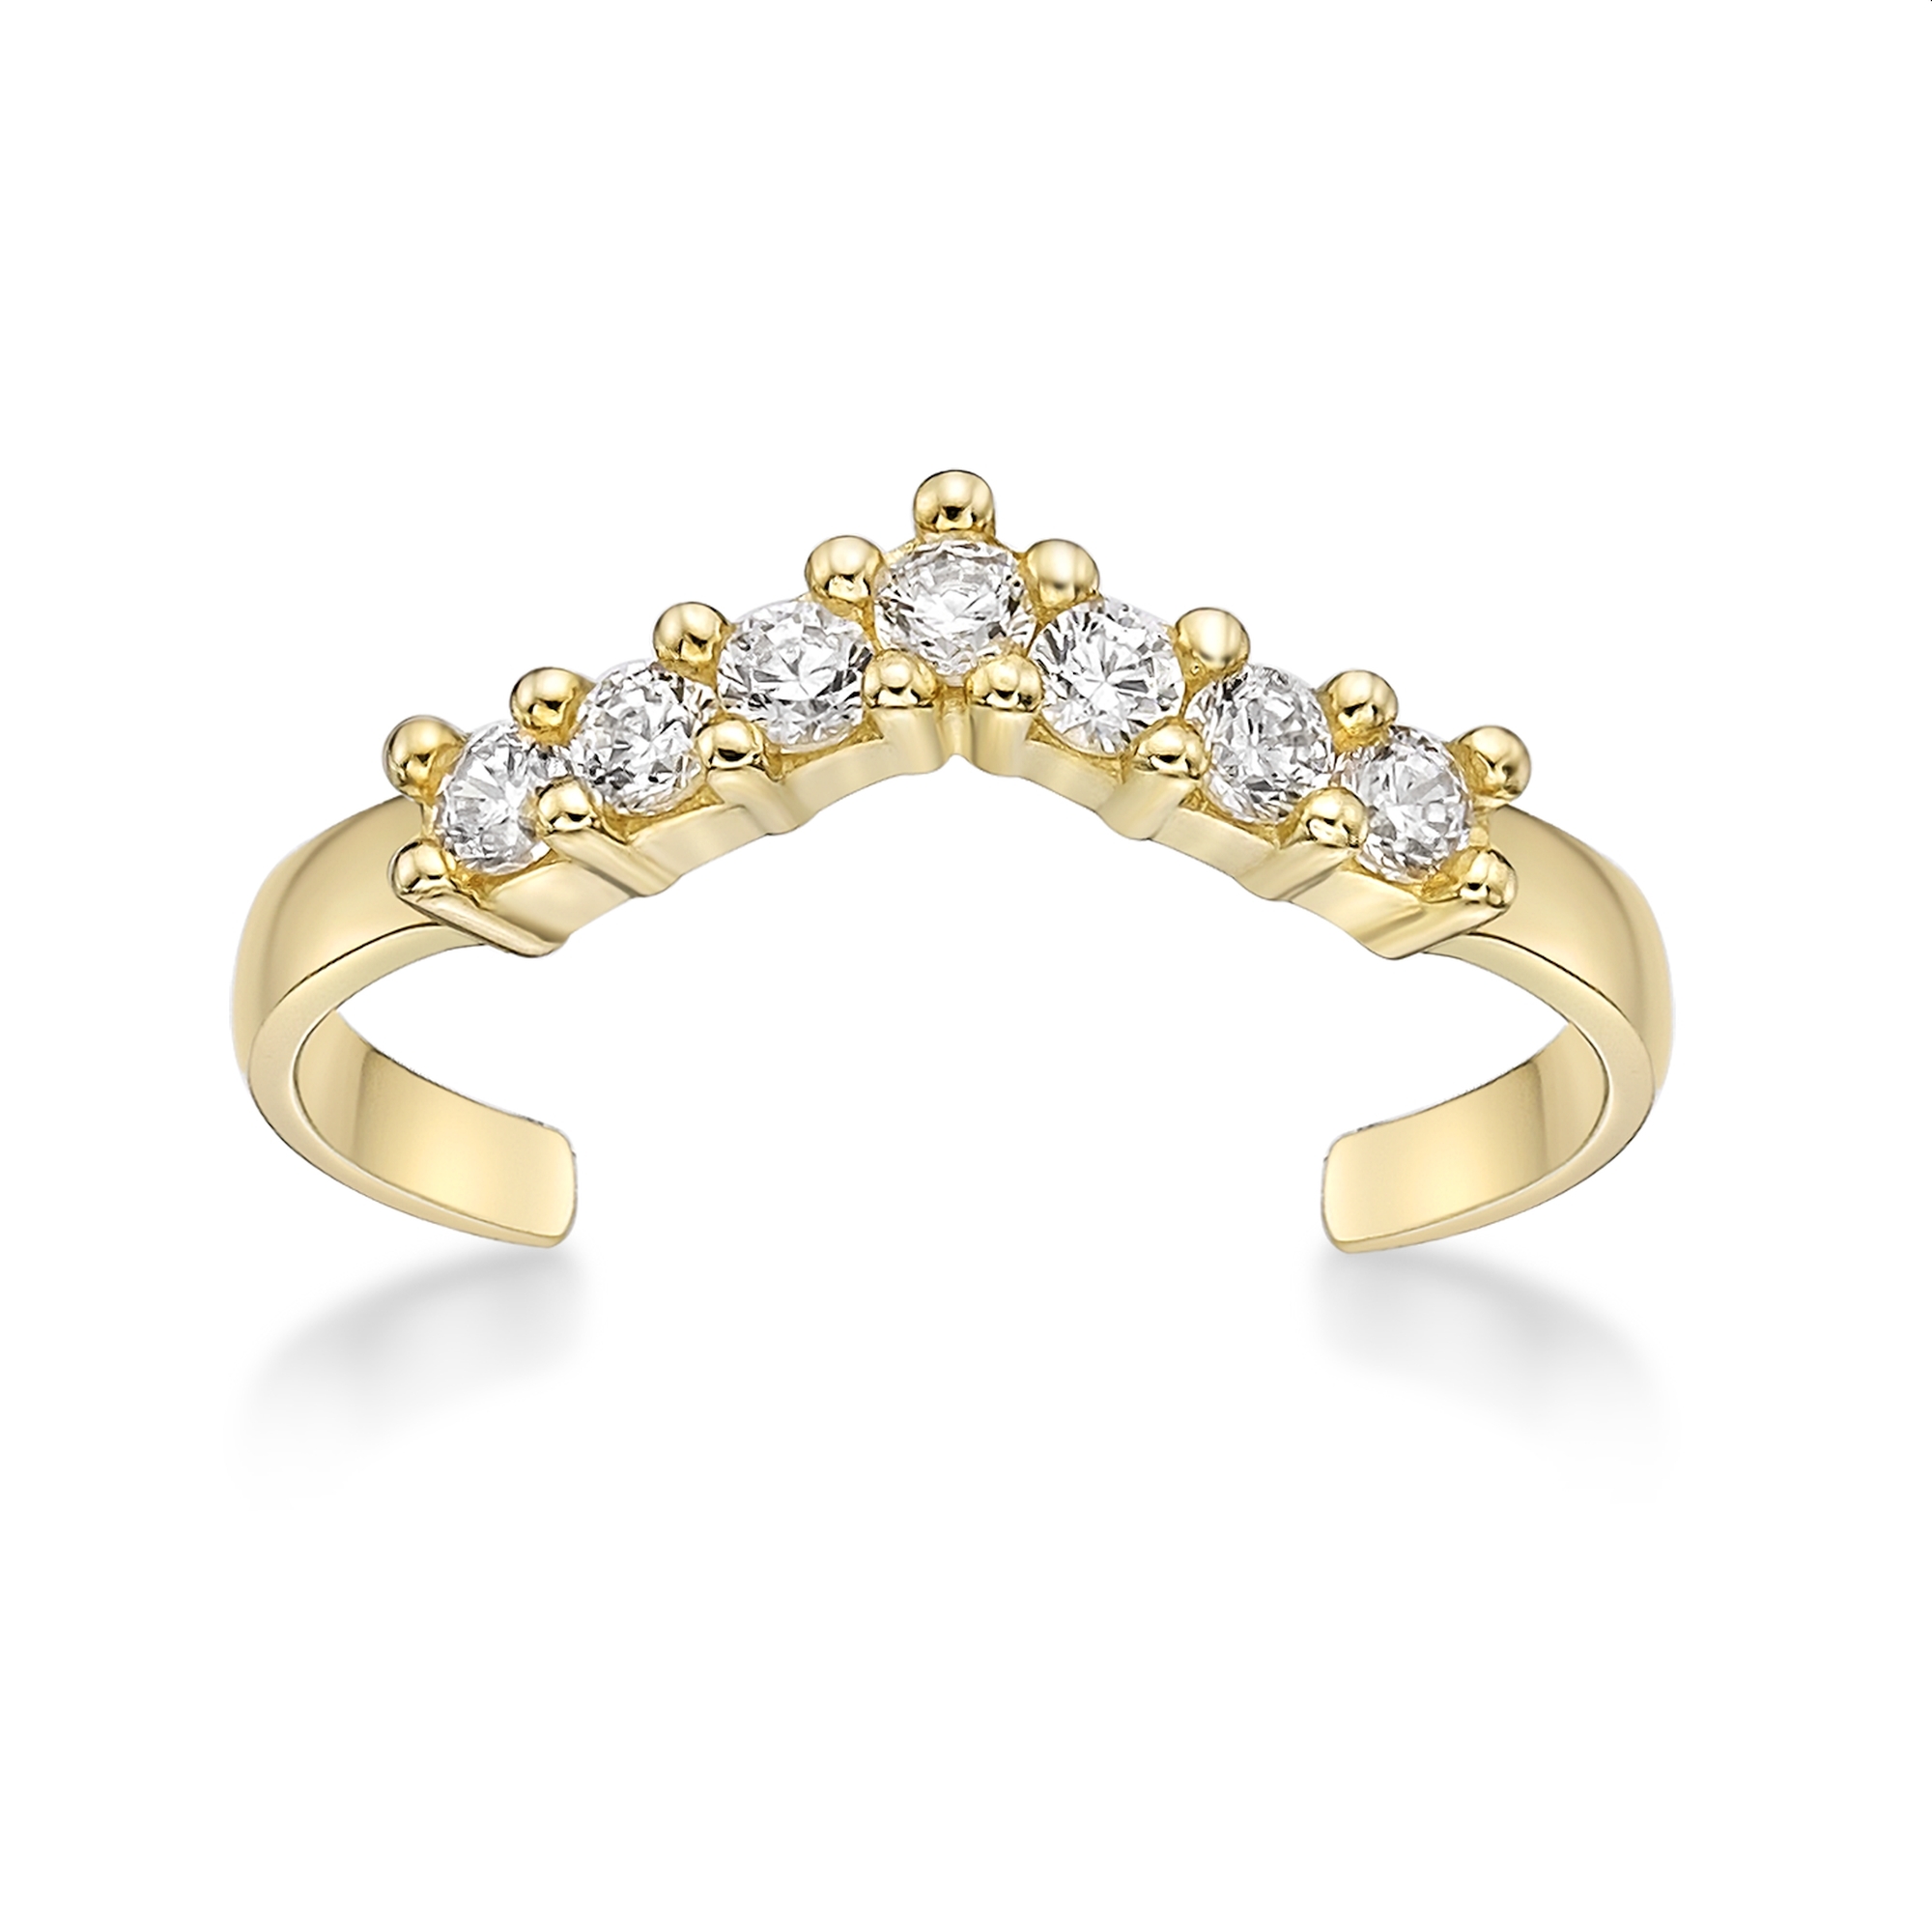 Lavari Jewelers Women's V-Shaped Adjustable Toe Ring, 10K Yellow Gold, Cubic Zirconia, 4 MM Wide